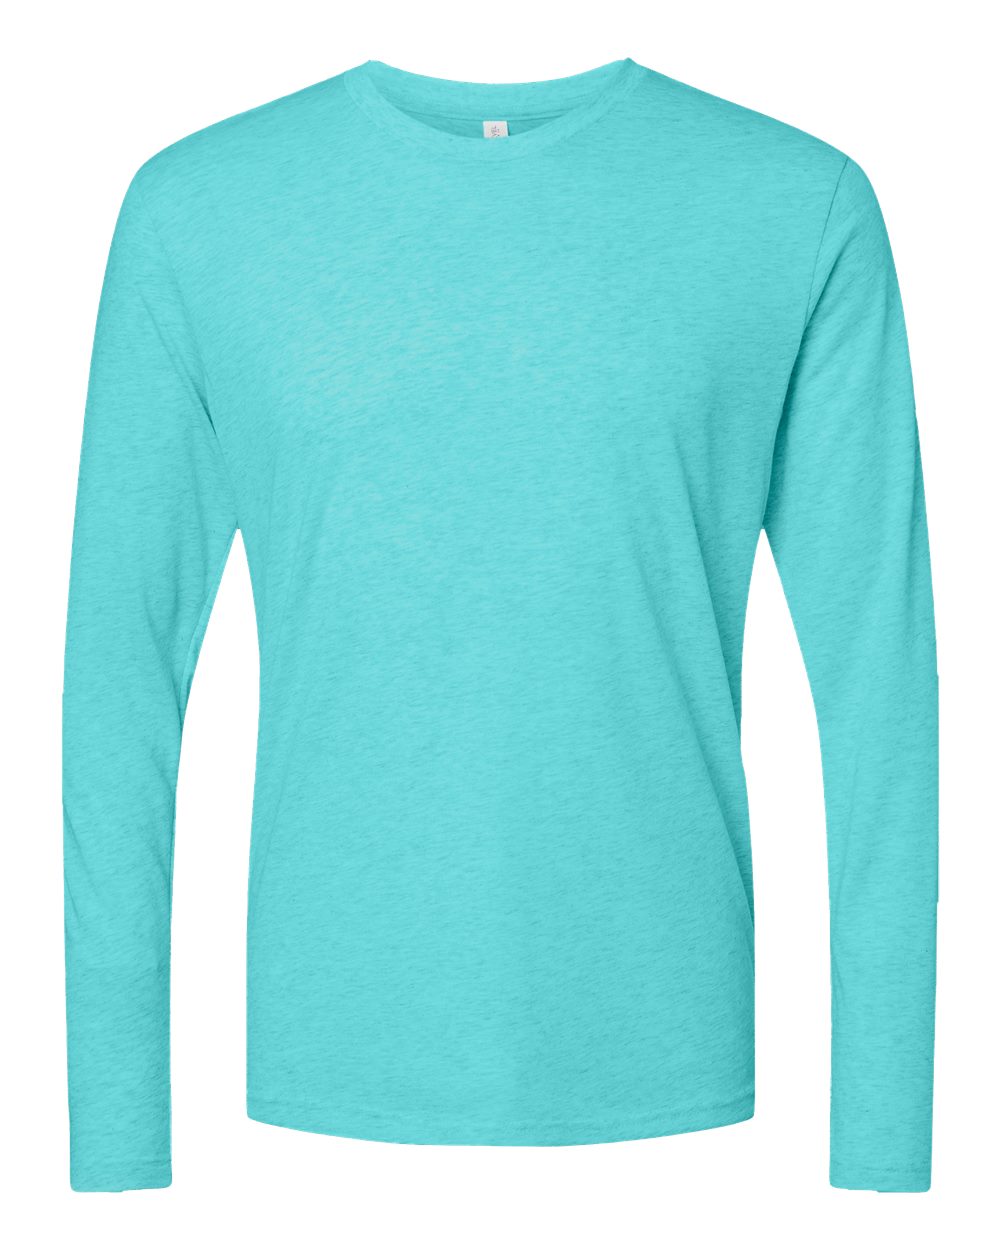 Next Level - Unisex Triblend Long Sleeve T-Shirt - 6071